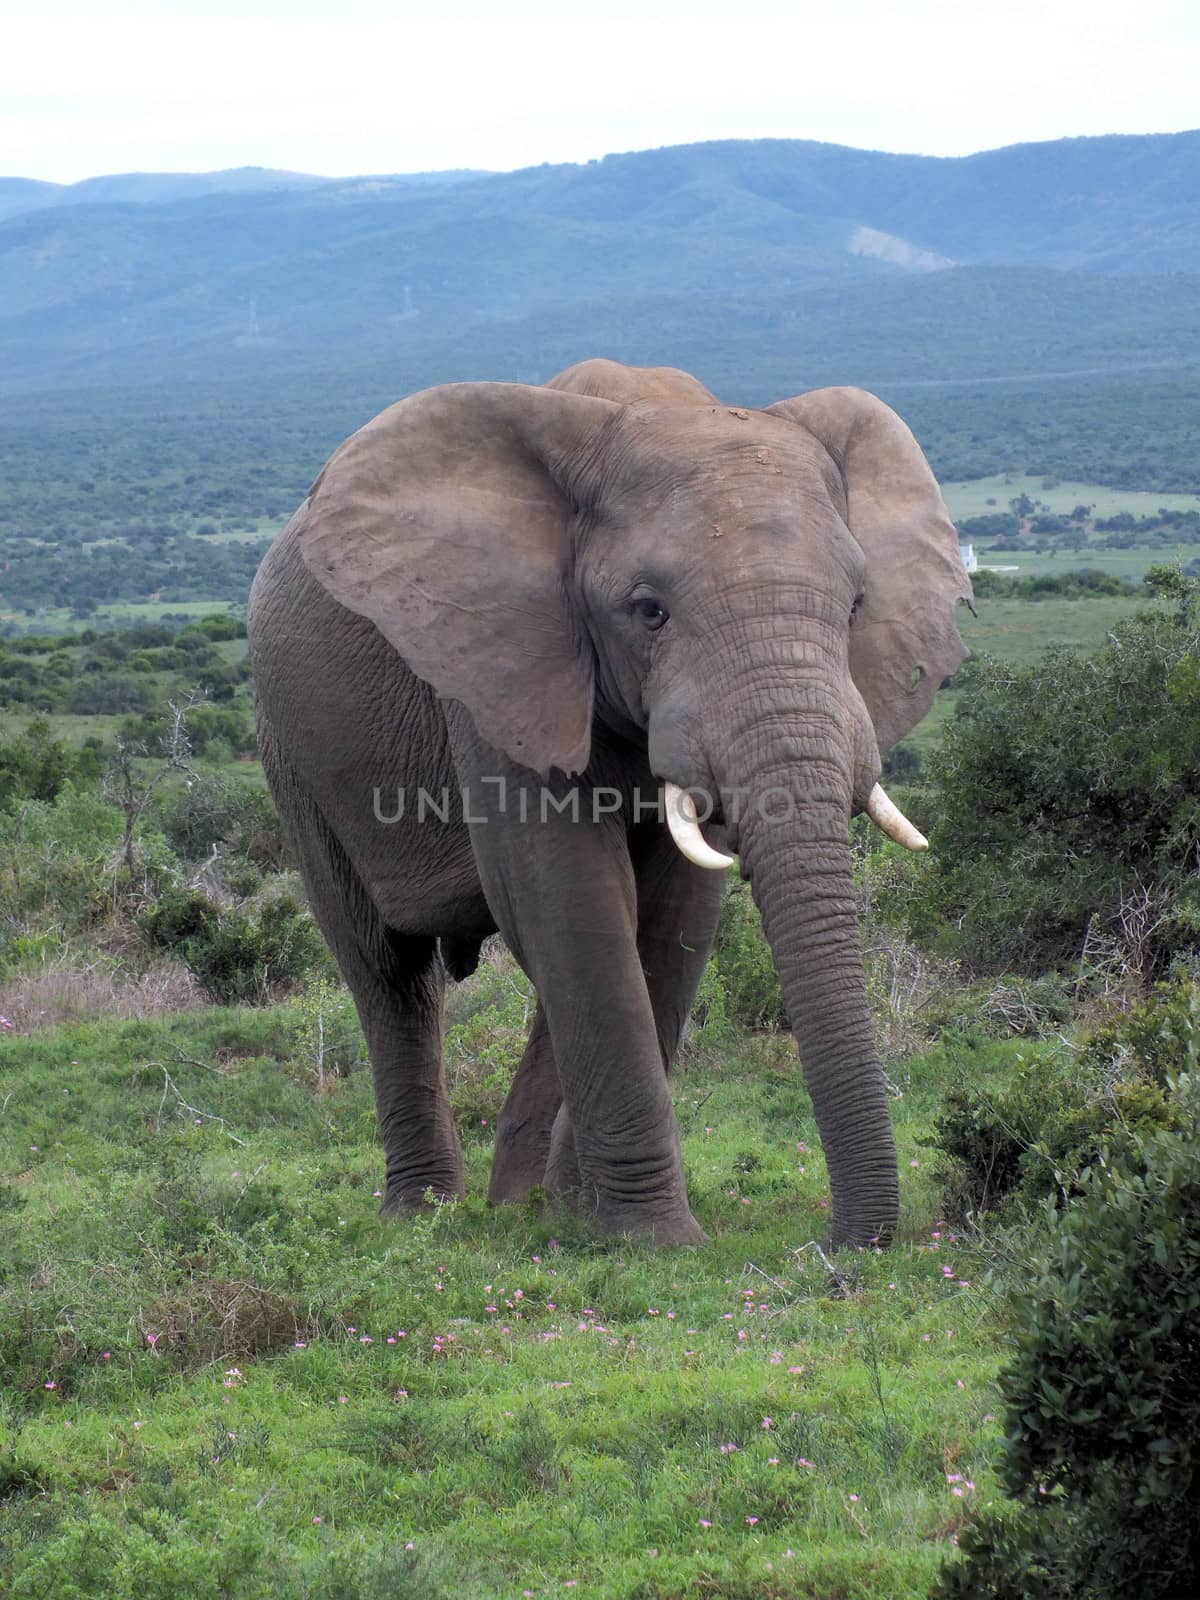 Bull Elephant by glynspencer